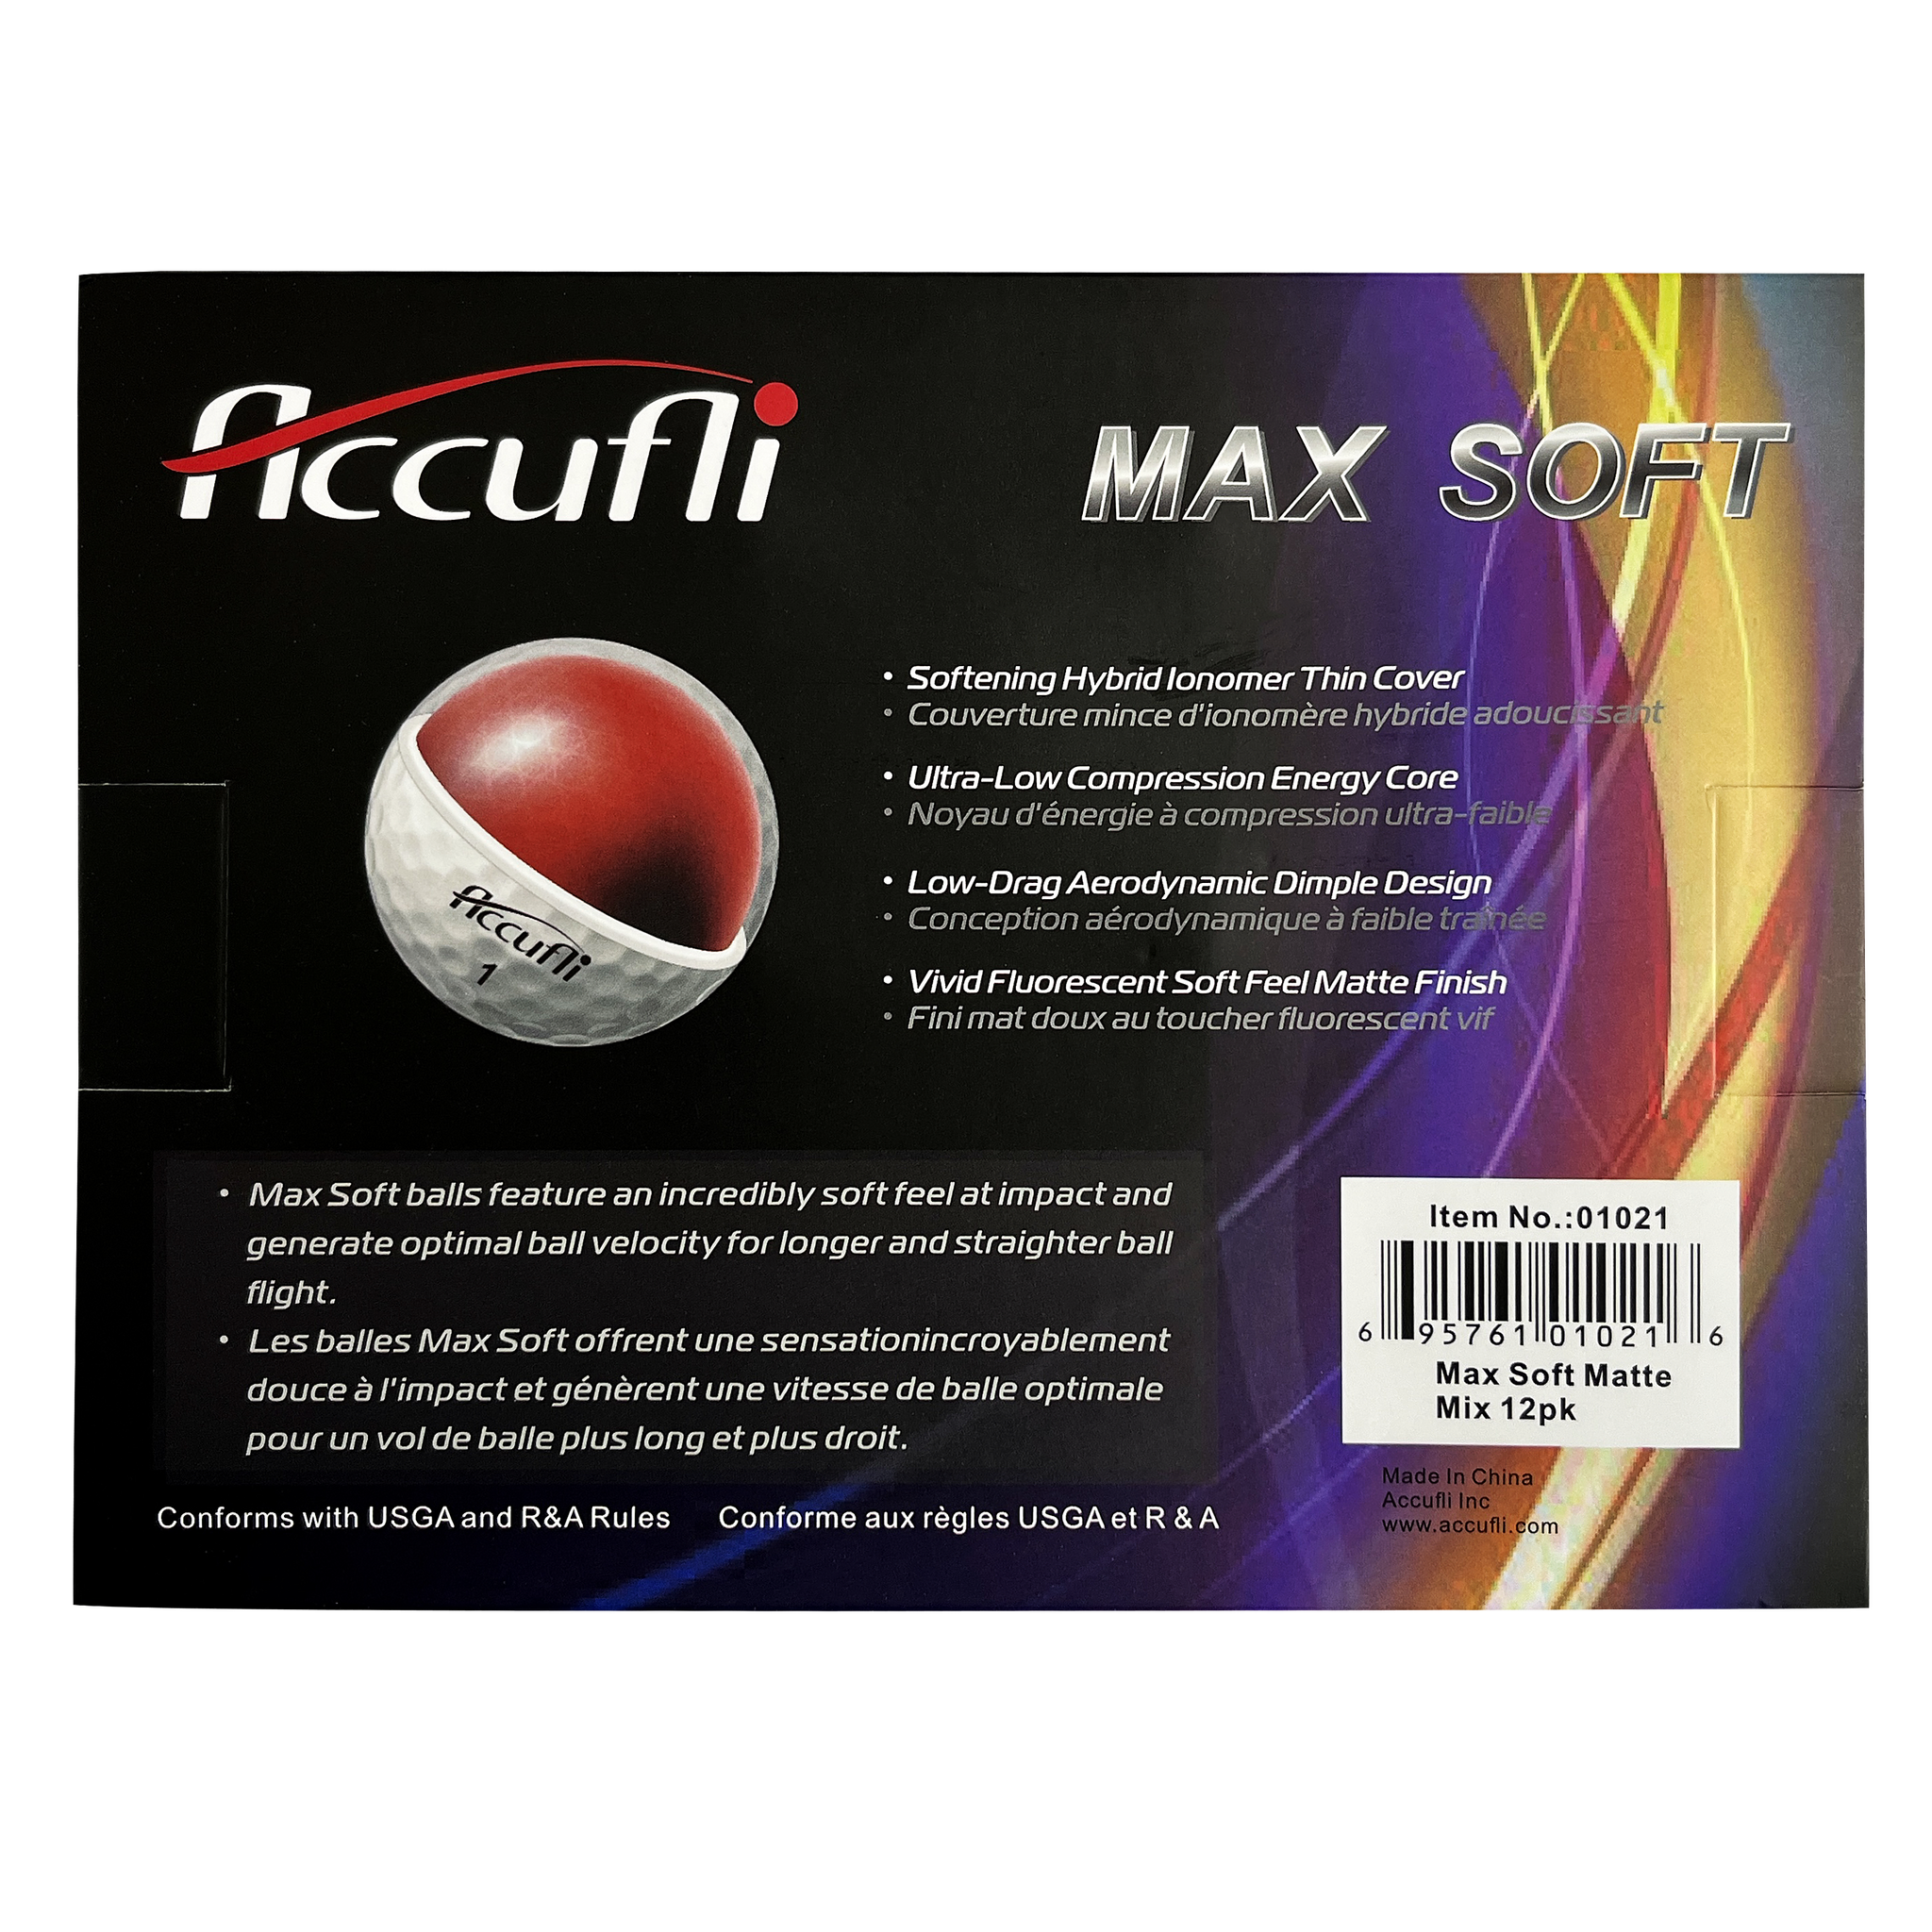 Accufli Max Soft Matte Mix (MT2)12-pack färgade golfbollar